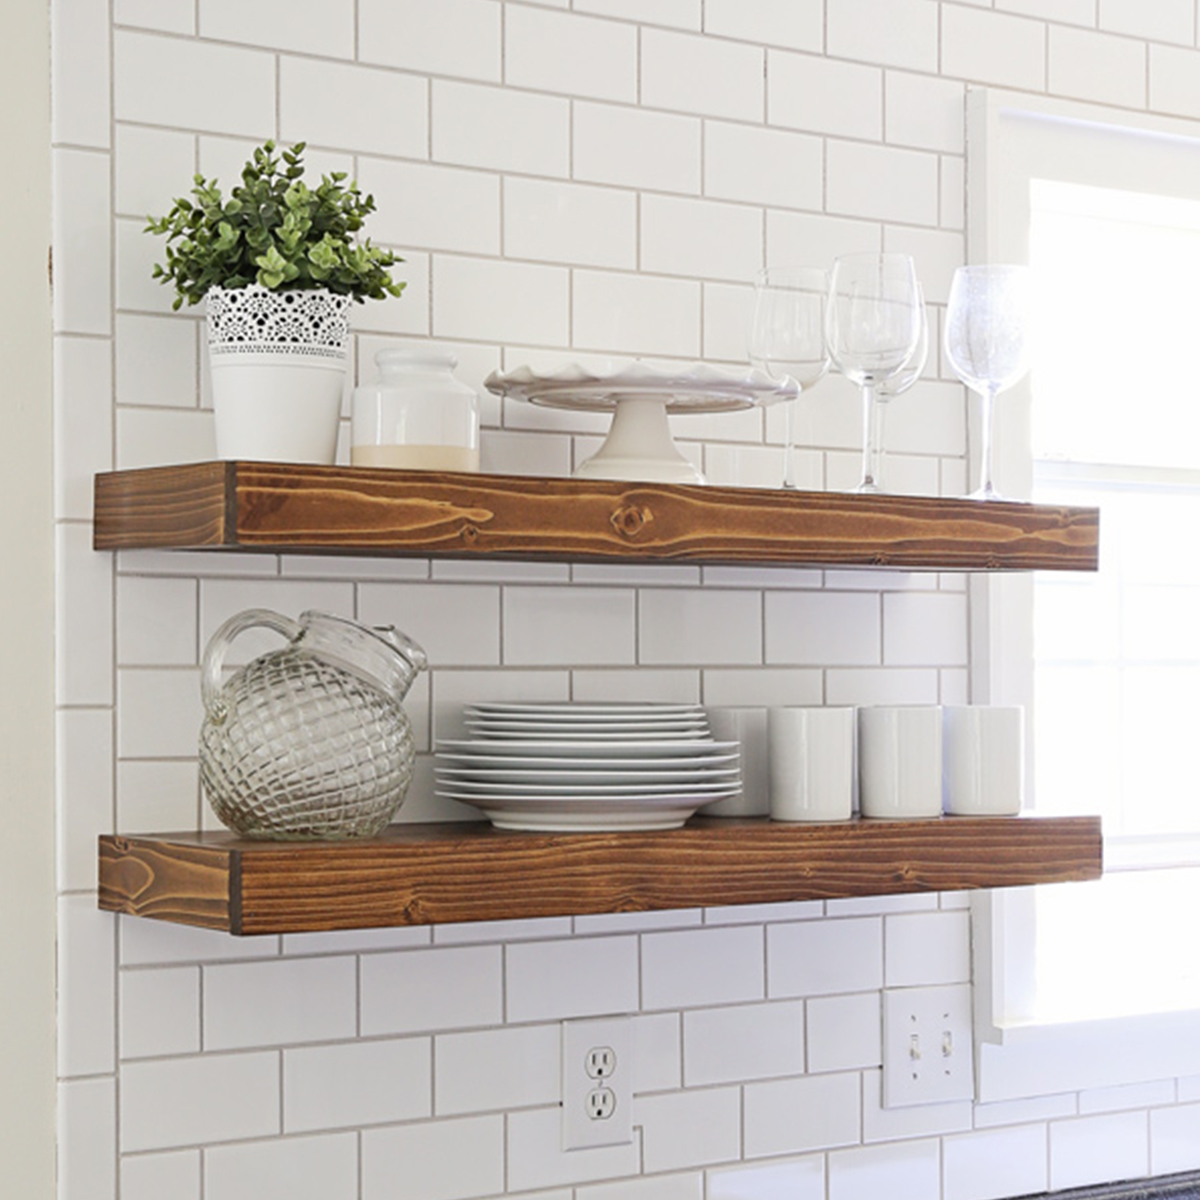 Diy Kitchen Floating Shelves Lessons, How To Install Floating Shelves On Tile